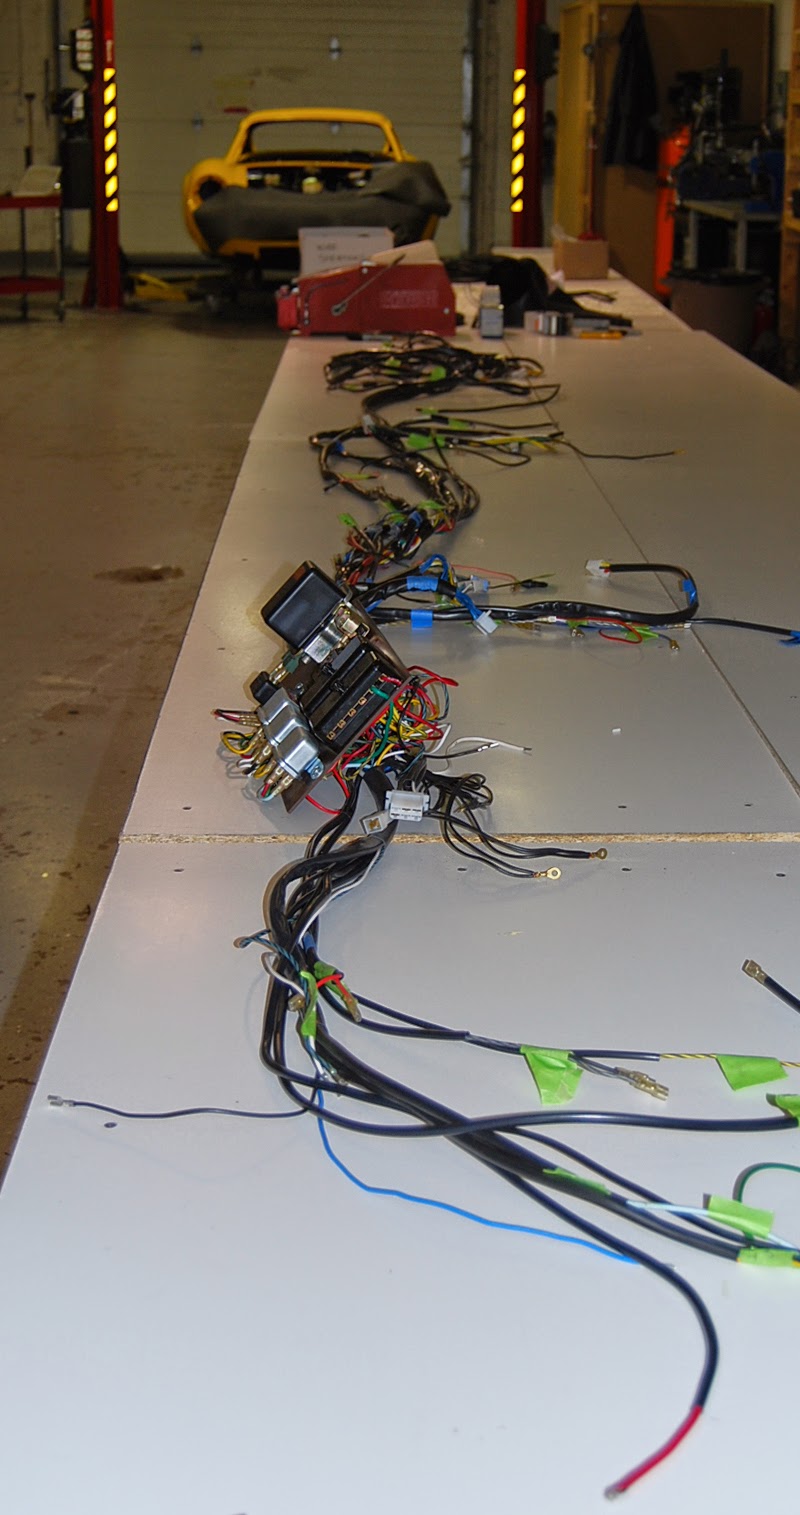 Dino 246 Restoration Blog: Path of least resistance: Wiring harness